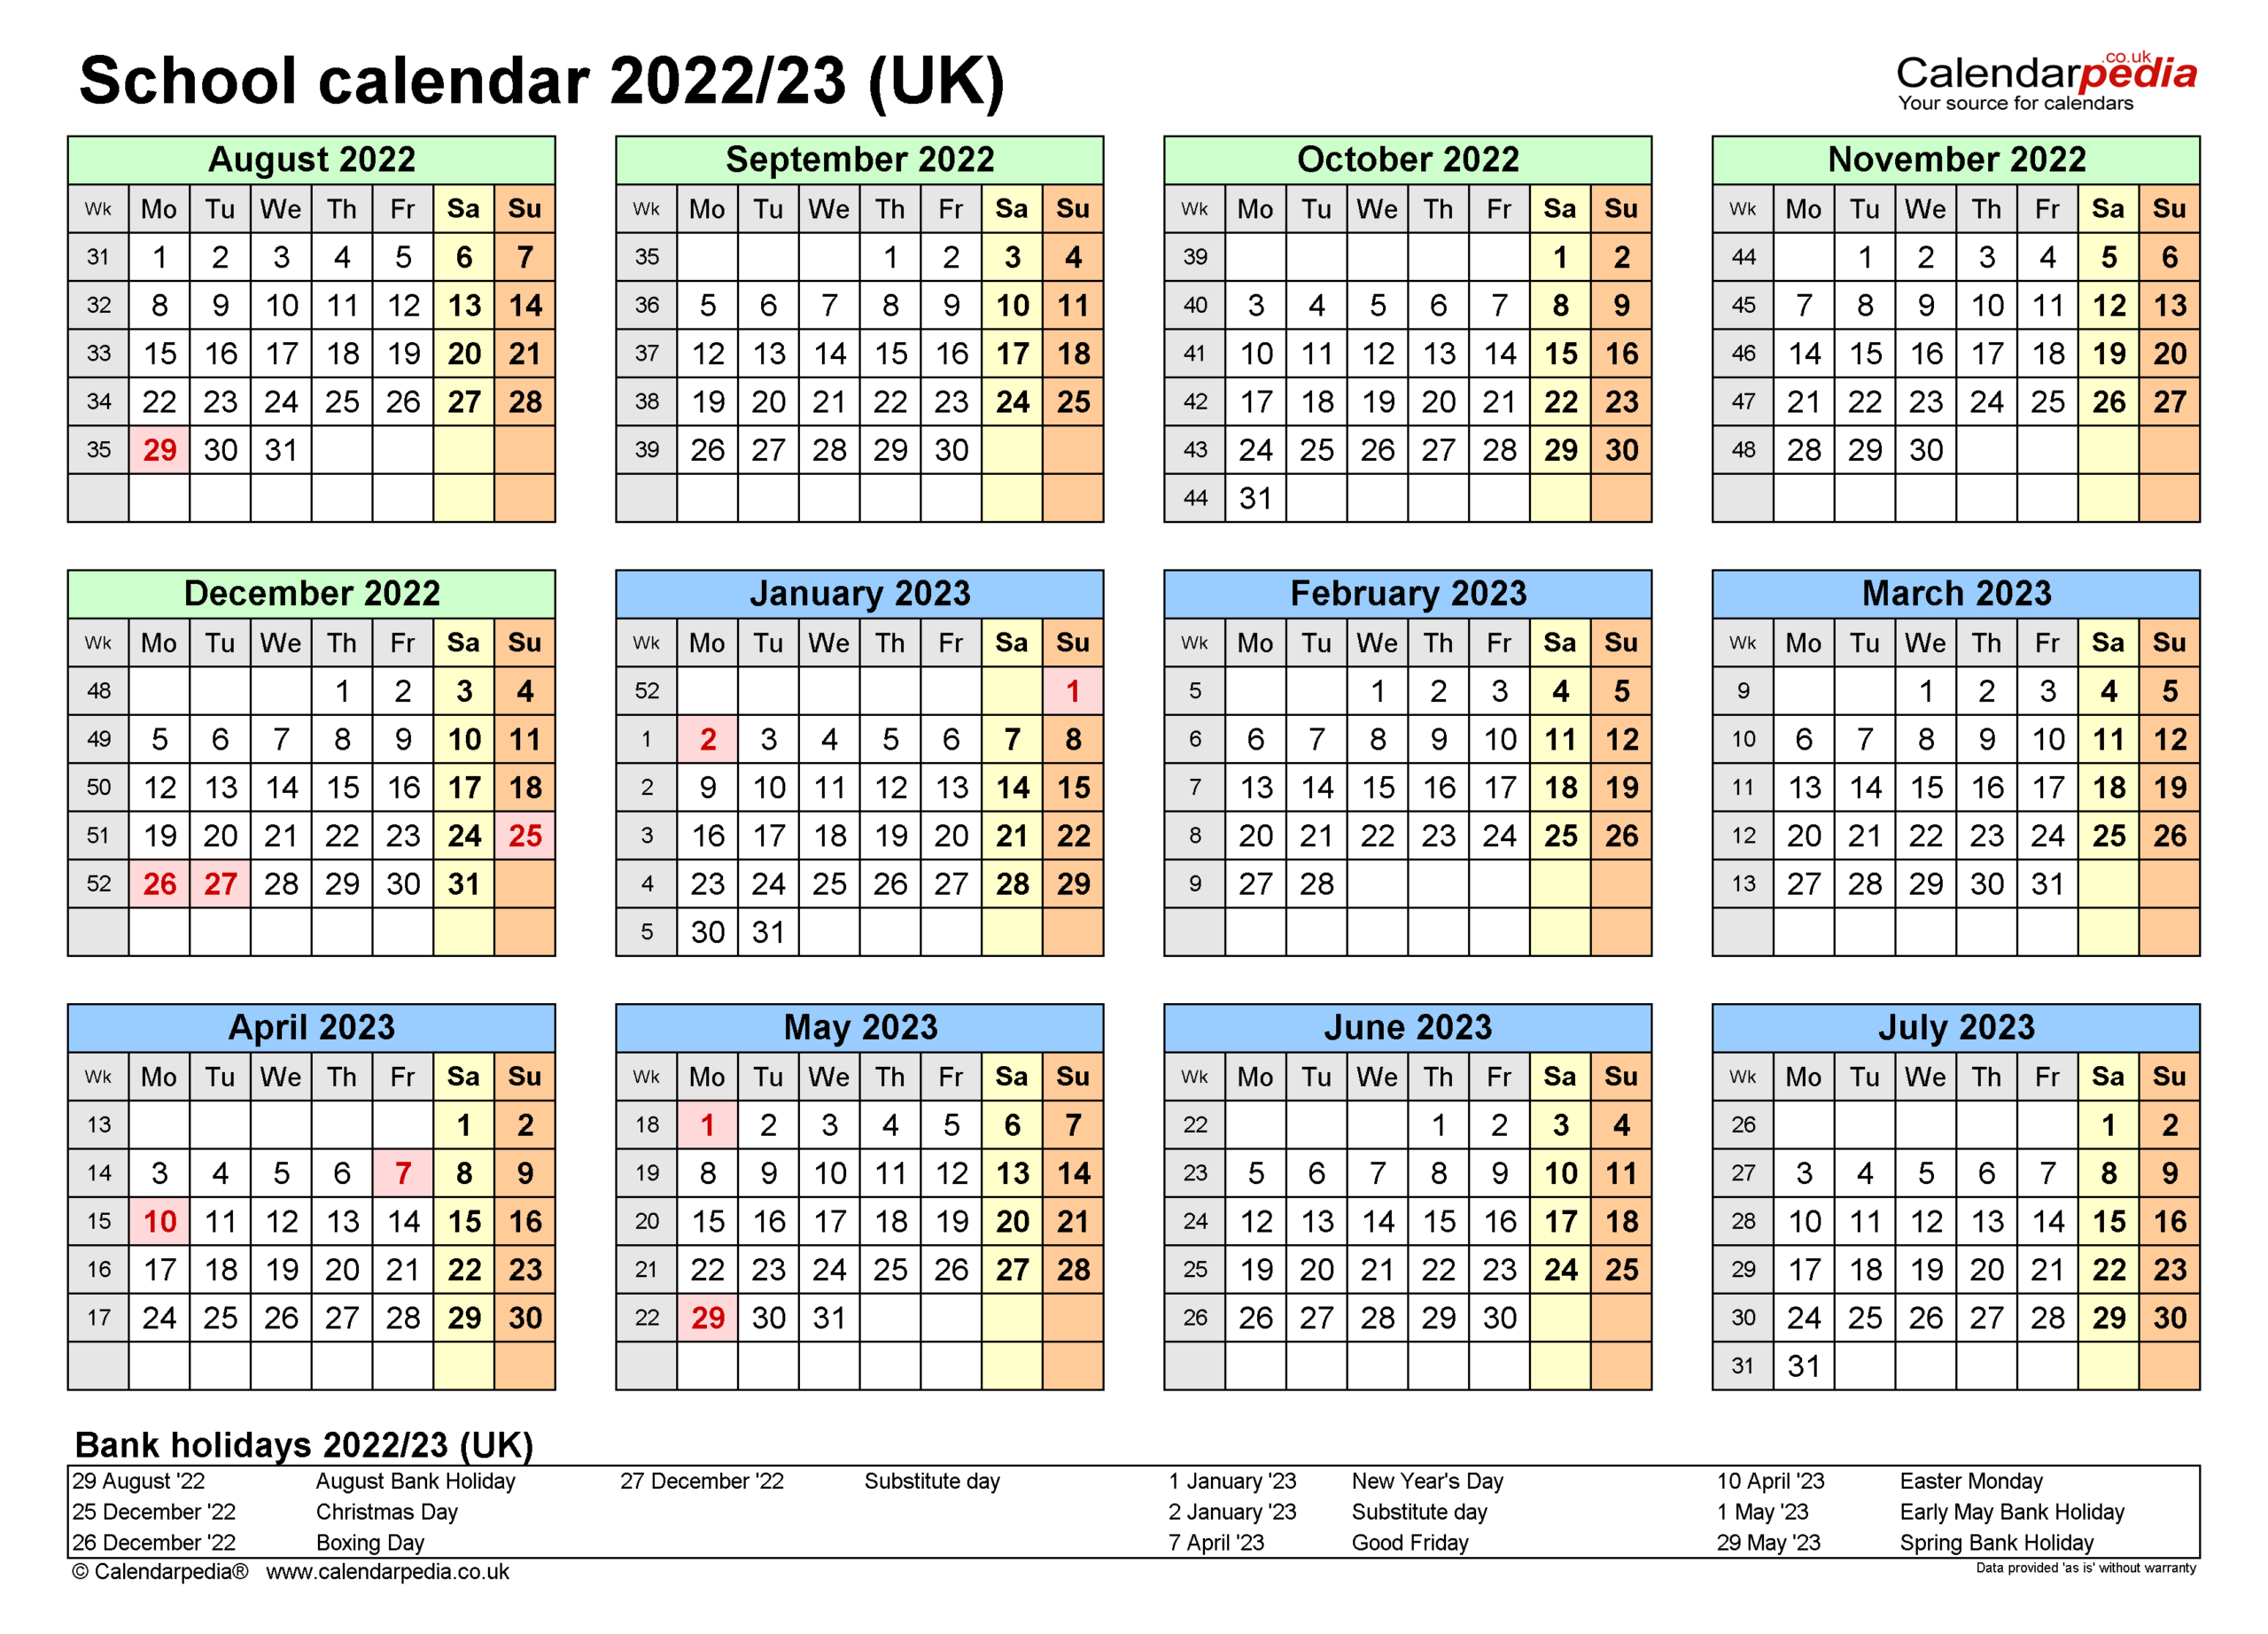 School Calendar 2022 To 2023 Mauritius | Calendar